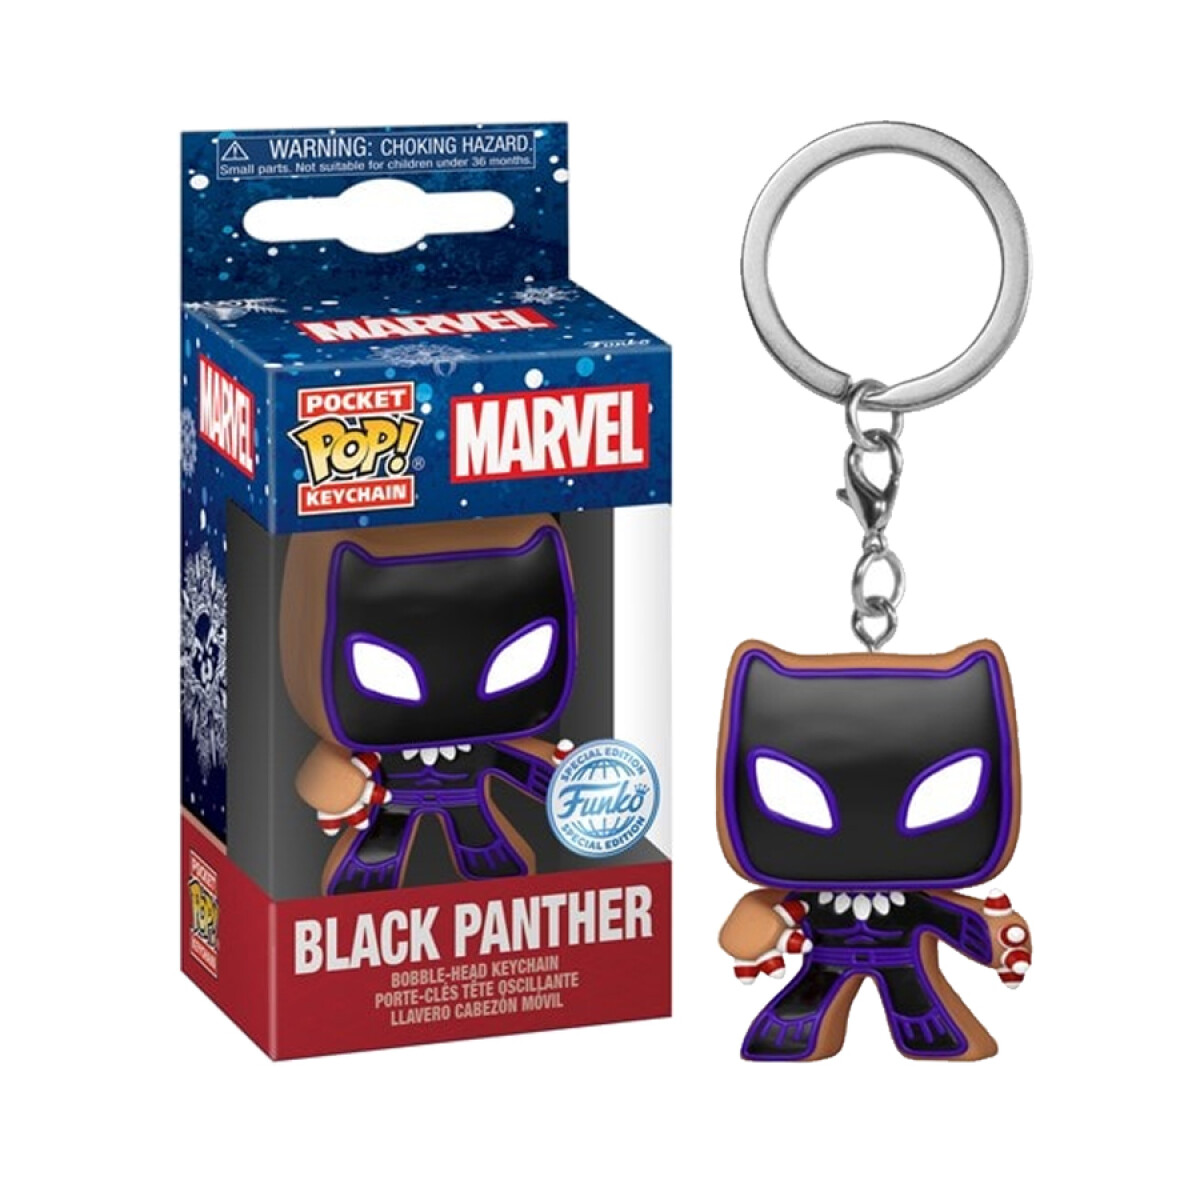 Pocket Pop! Keychain - Marvel - Black Panther Navideño de Jengibre [Exclusivo] 